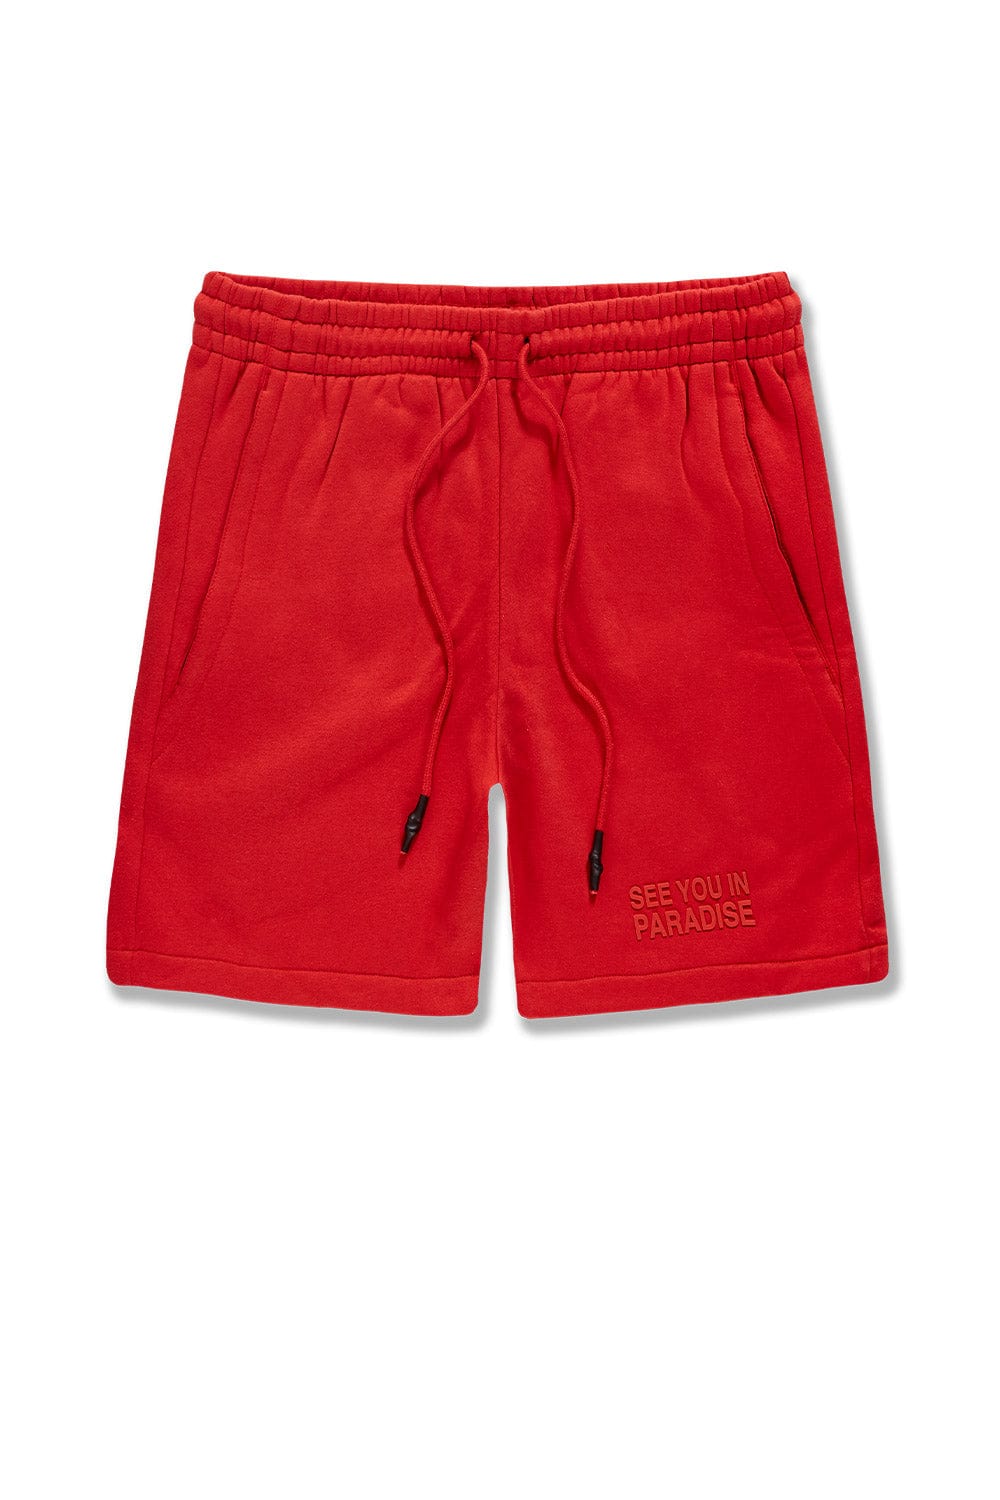 JC Big Men Big Men's Retro Paradise Tonal Shorts (Red)